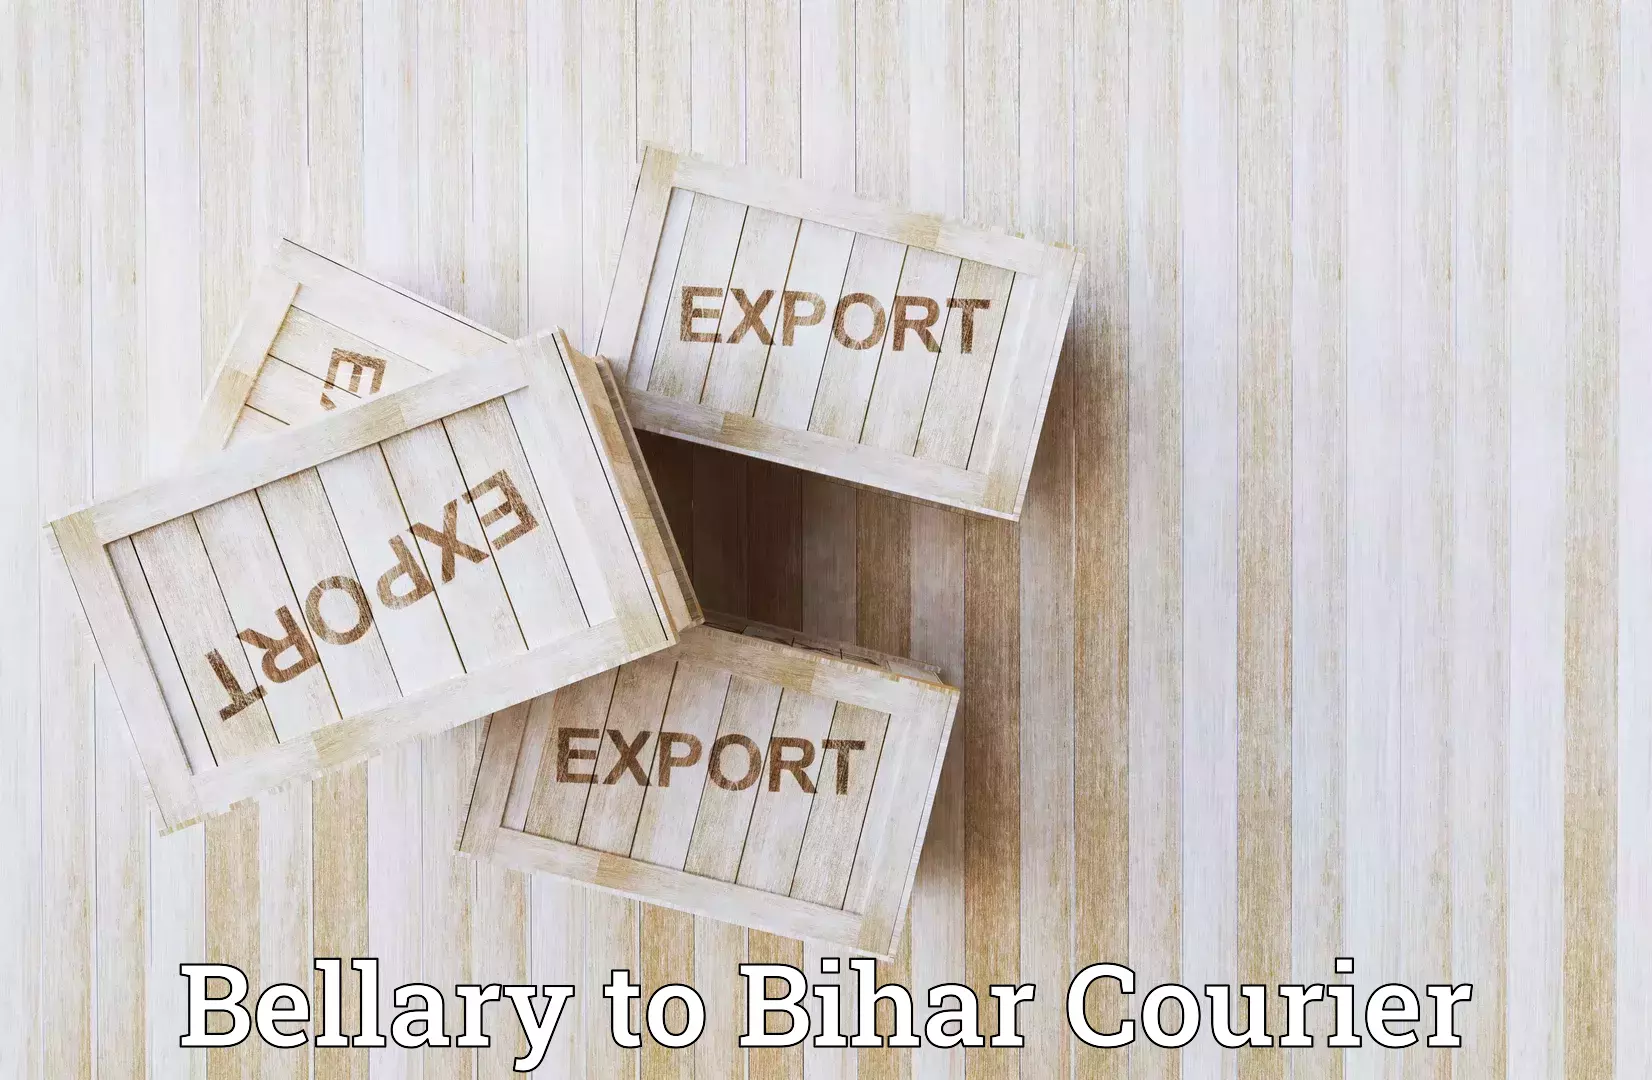 Easy return solutions in Bellary to Bihar